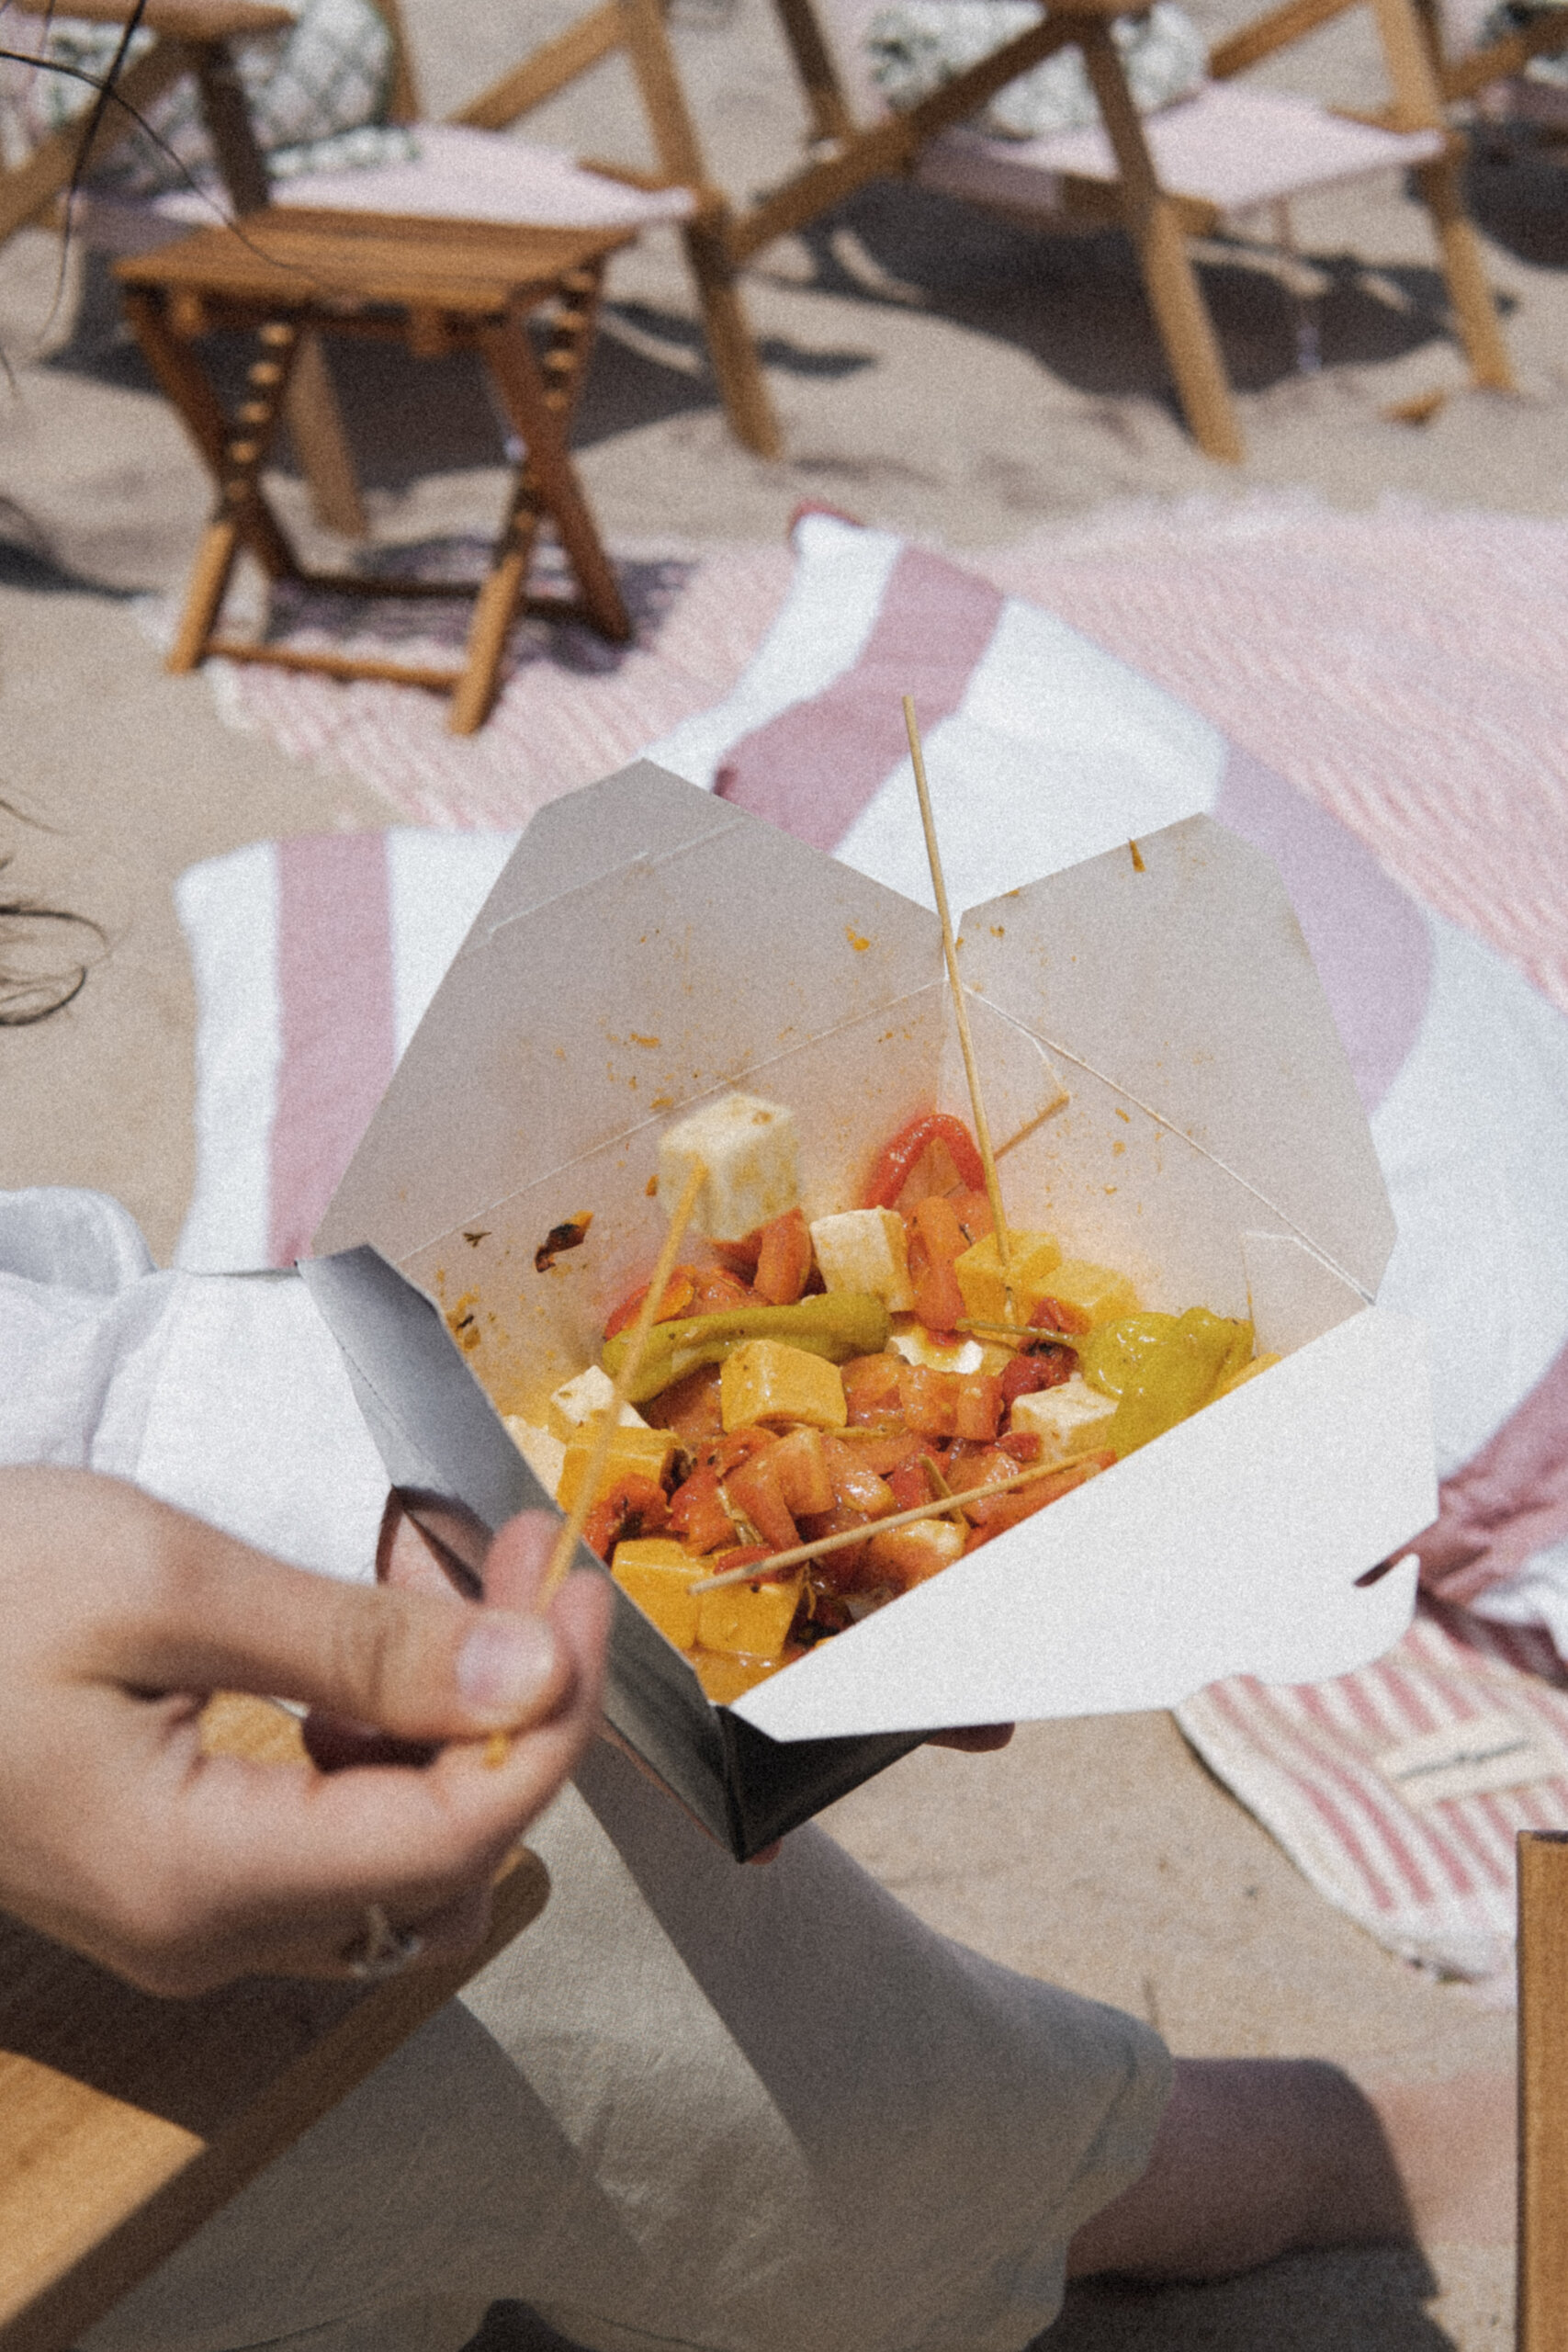 Beachampton brings food to you on the beach